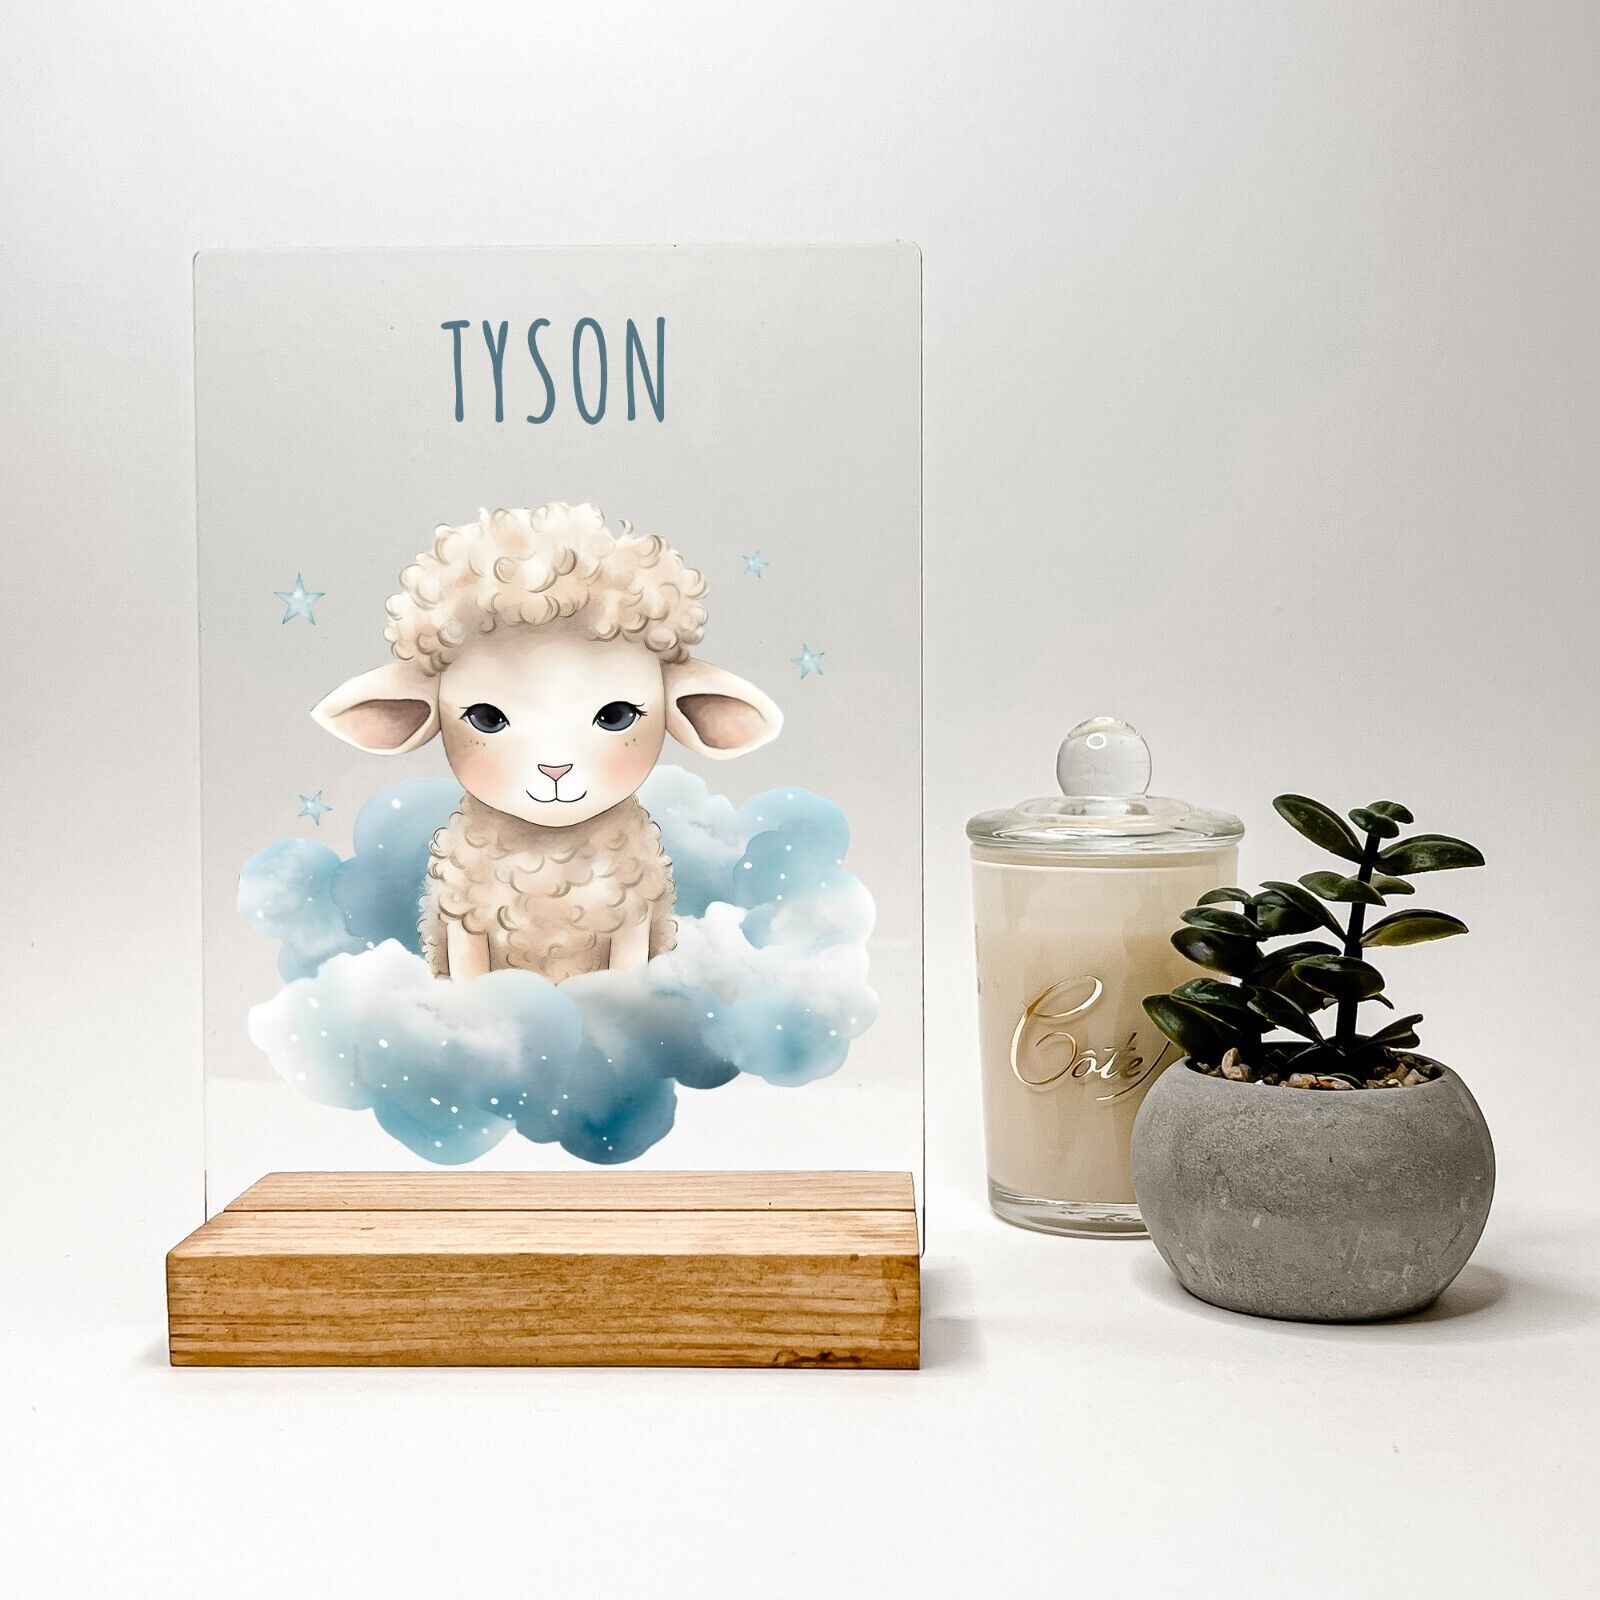 Personalized Acrylic Wood Stand Baby Newborn Animal Nursery Gift